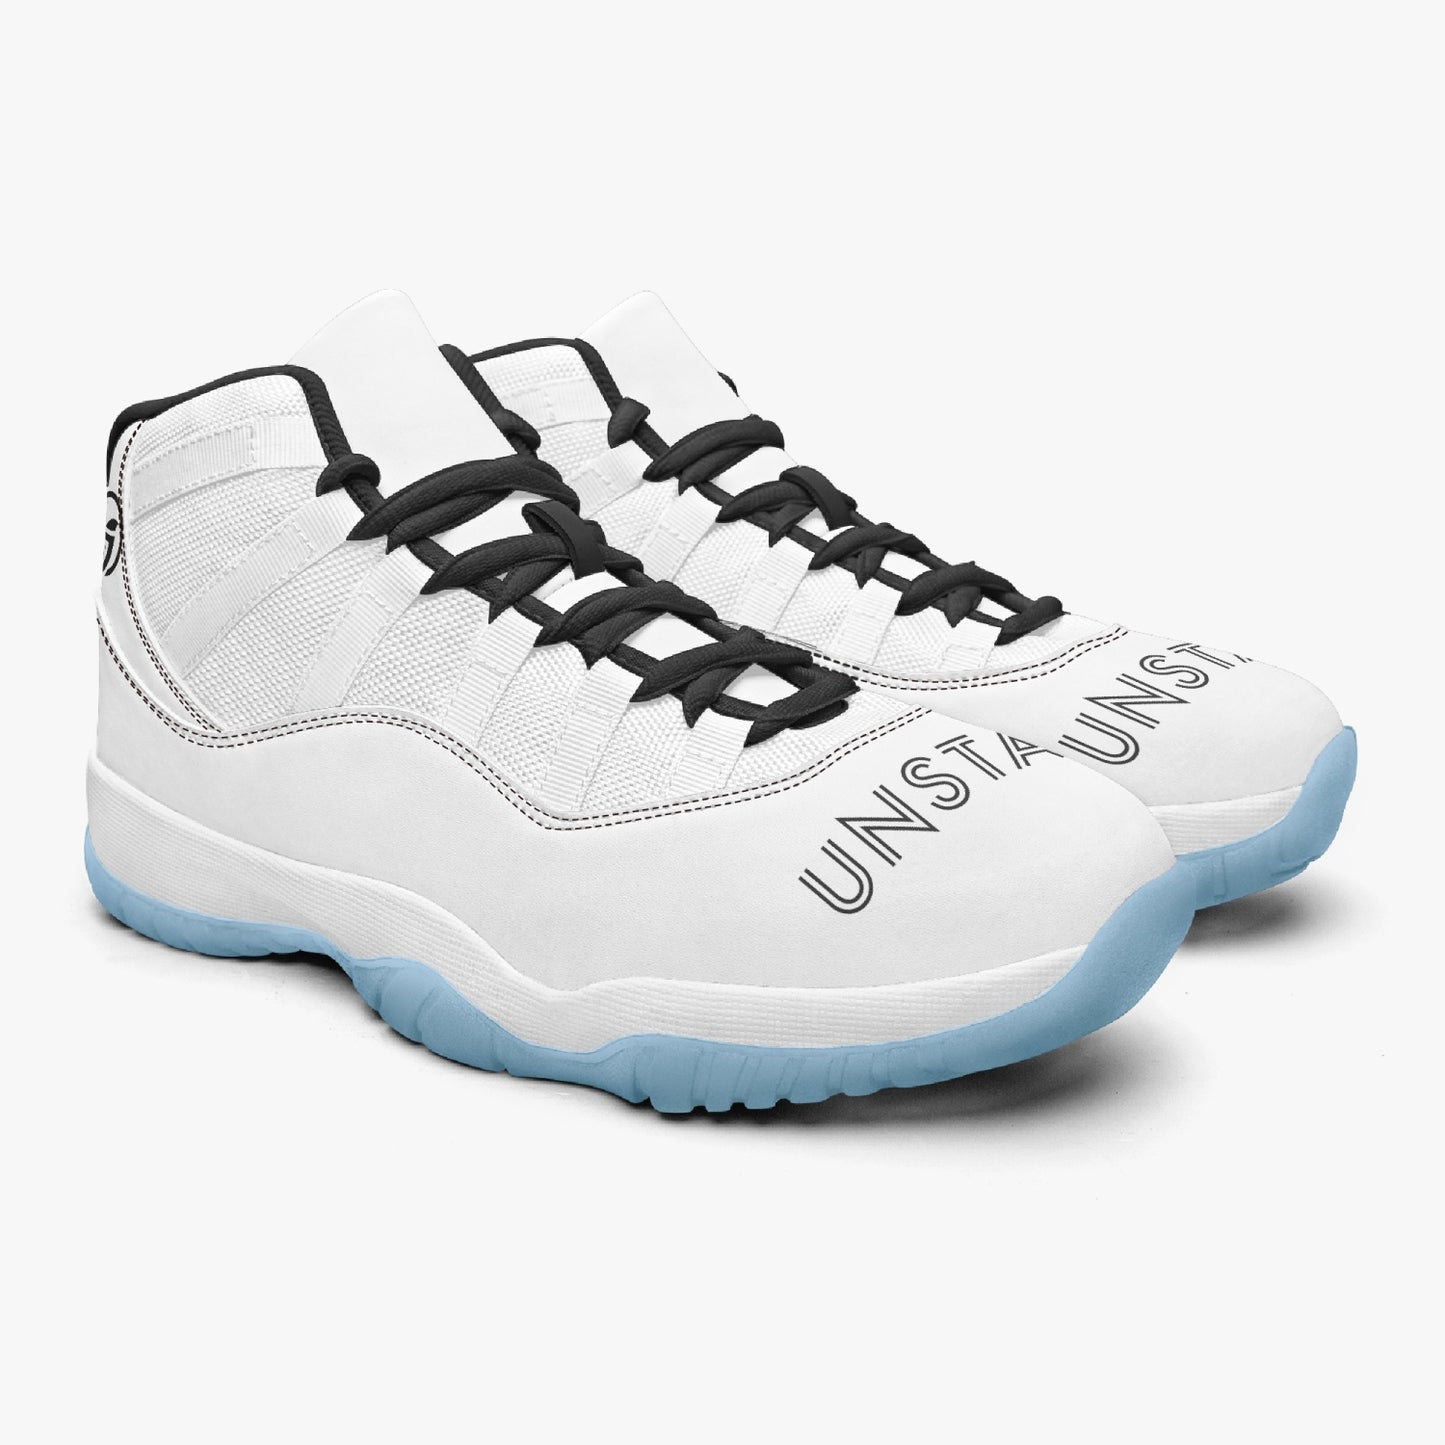 Unstax Whaks Basketball Sneakers -Blue Sole